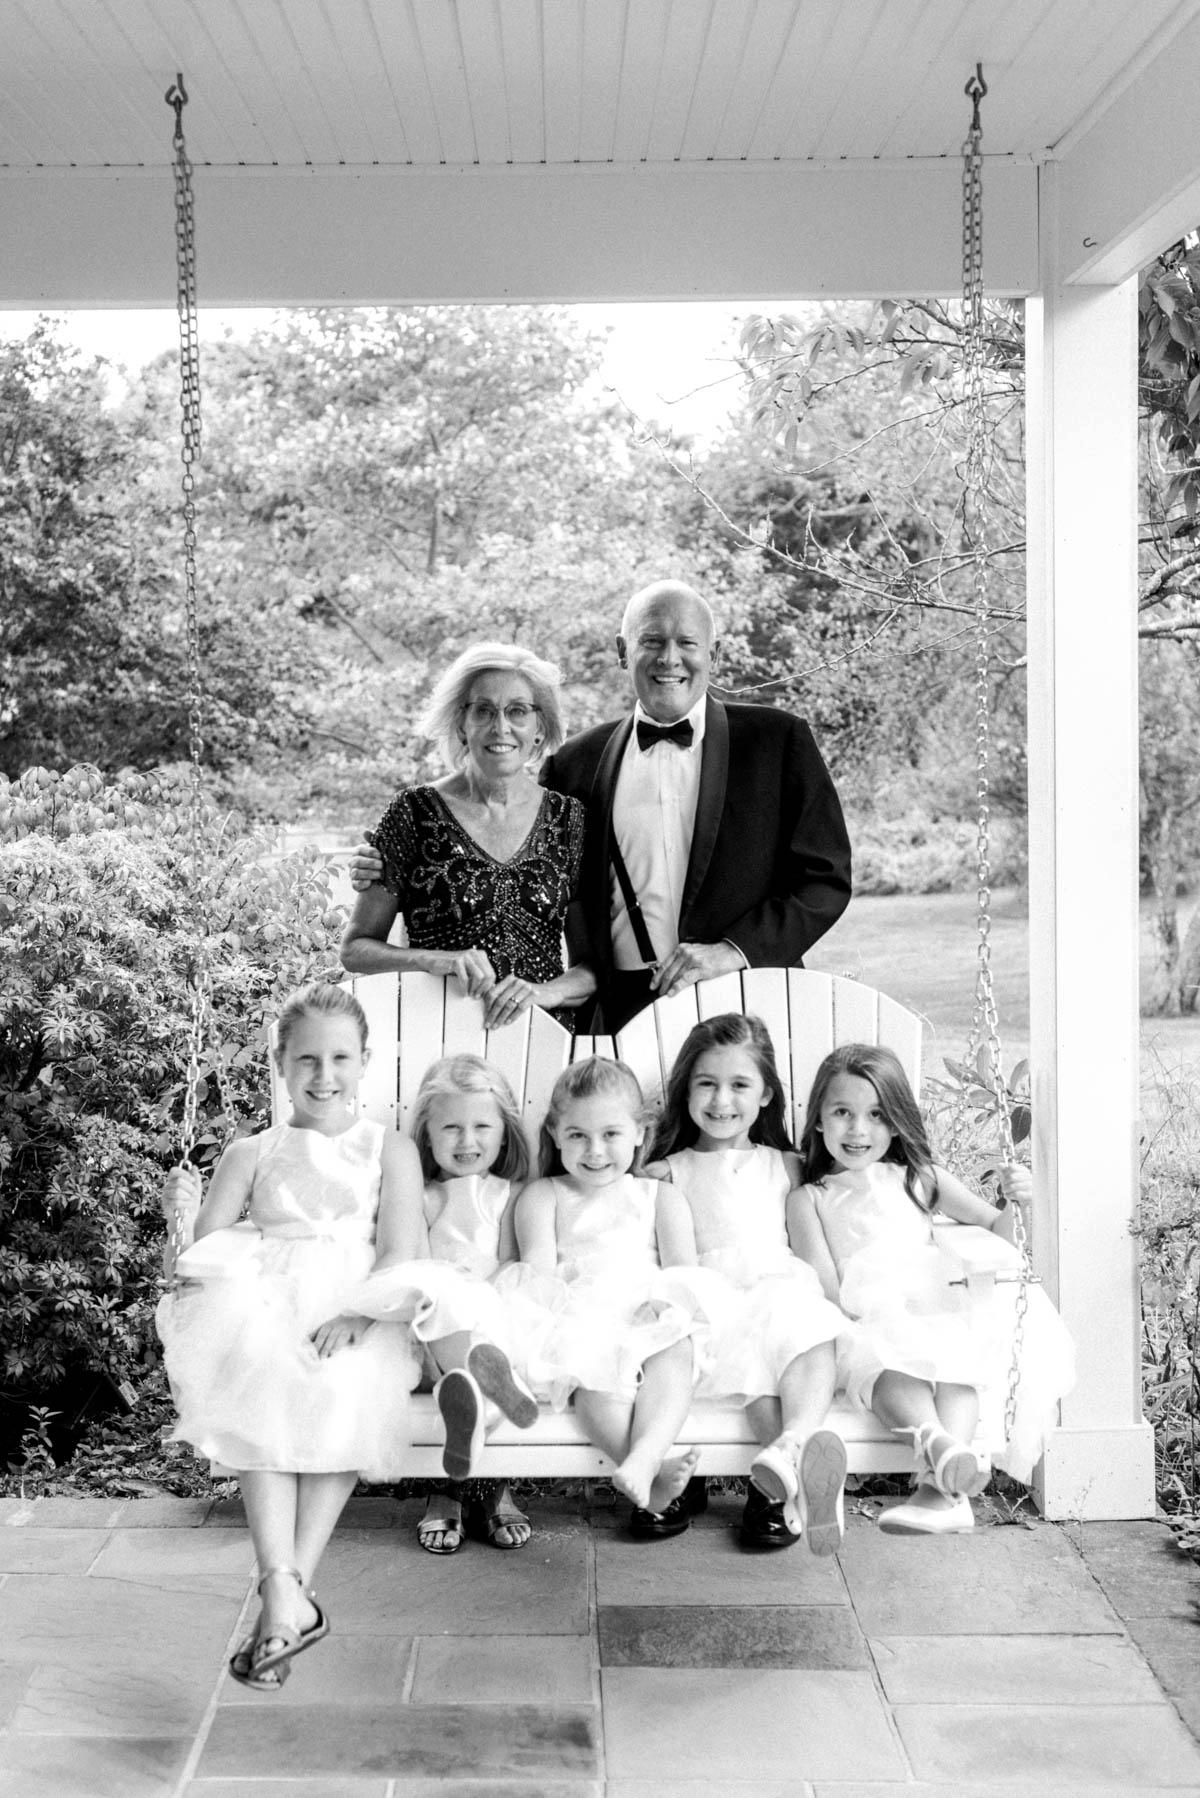 September Plimoth Plantation Wedding on Cape Cod captured by Boston Wedding Photographer Annmarie Swift